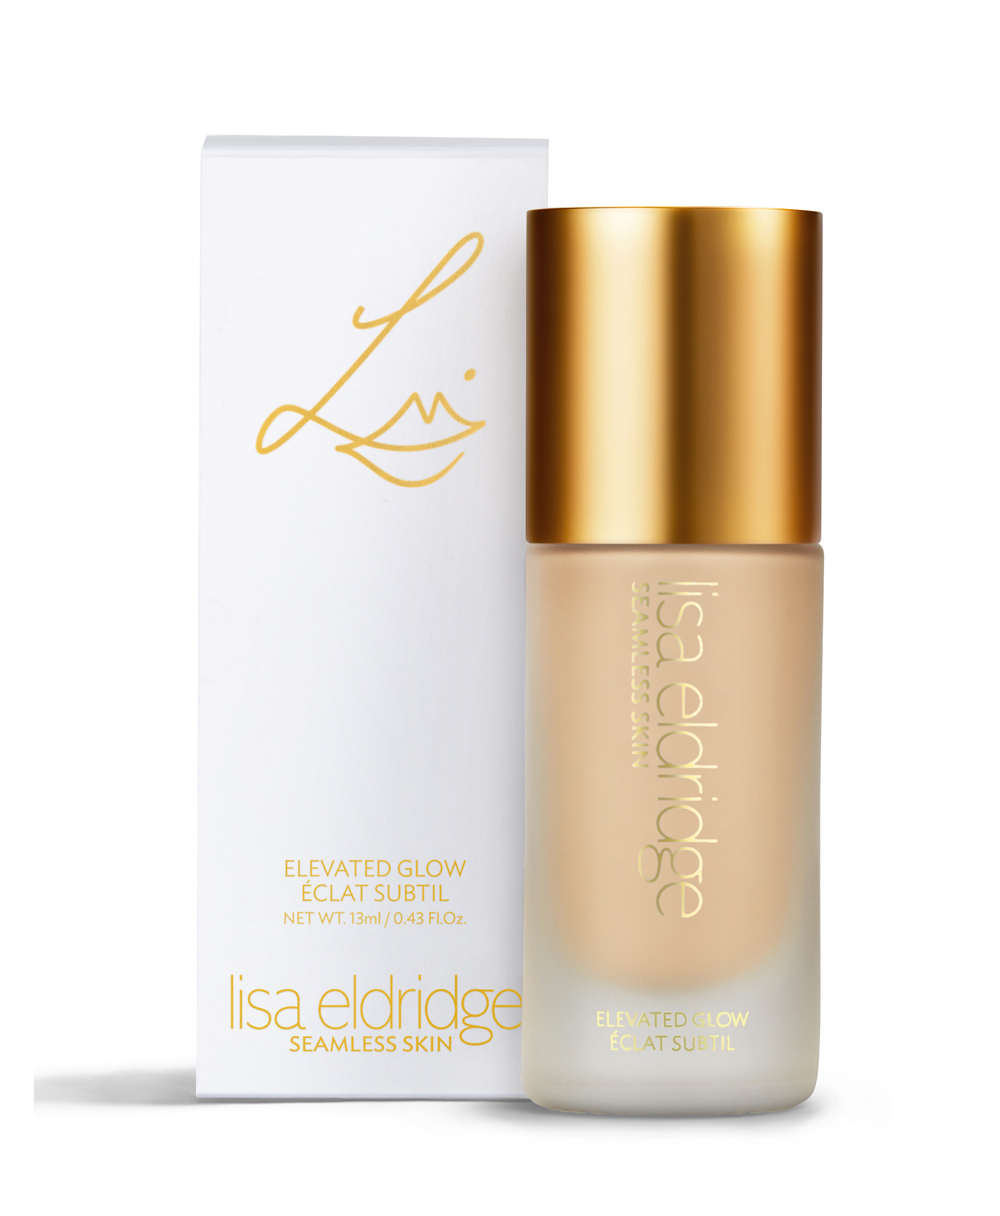 Lisa Eldridge lanserar Seamless Skin Elevated Glow